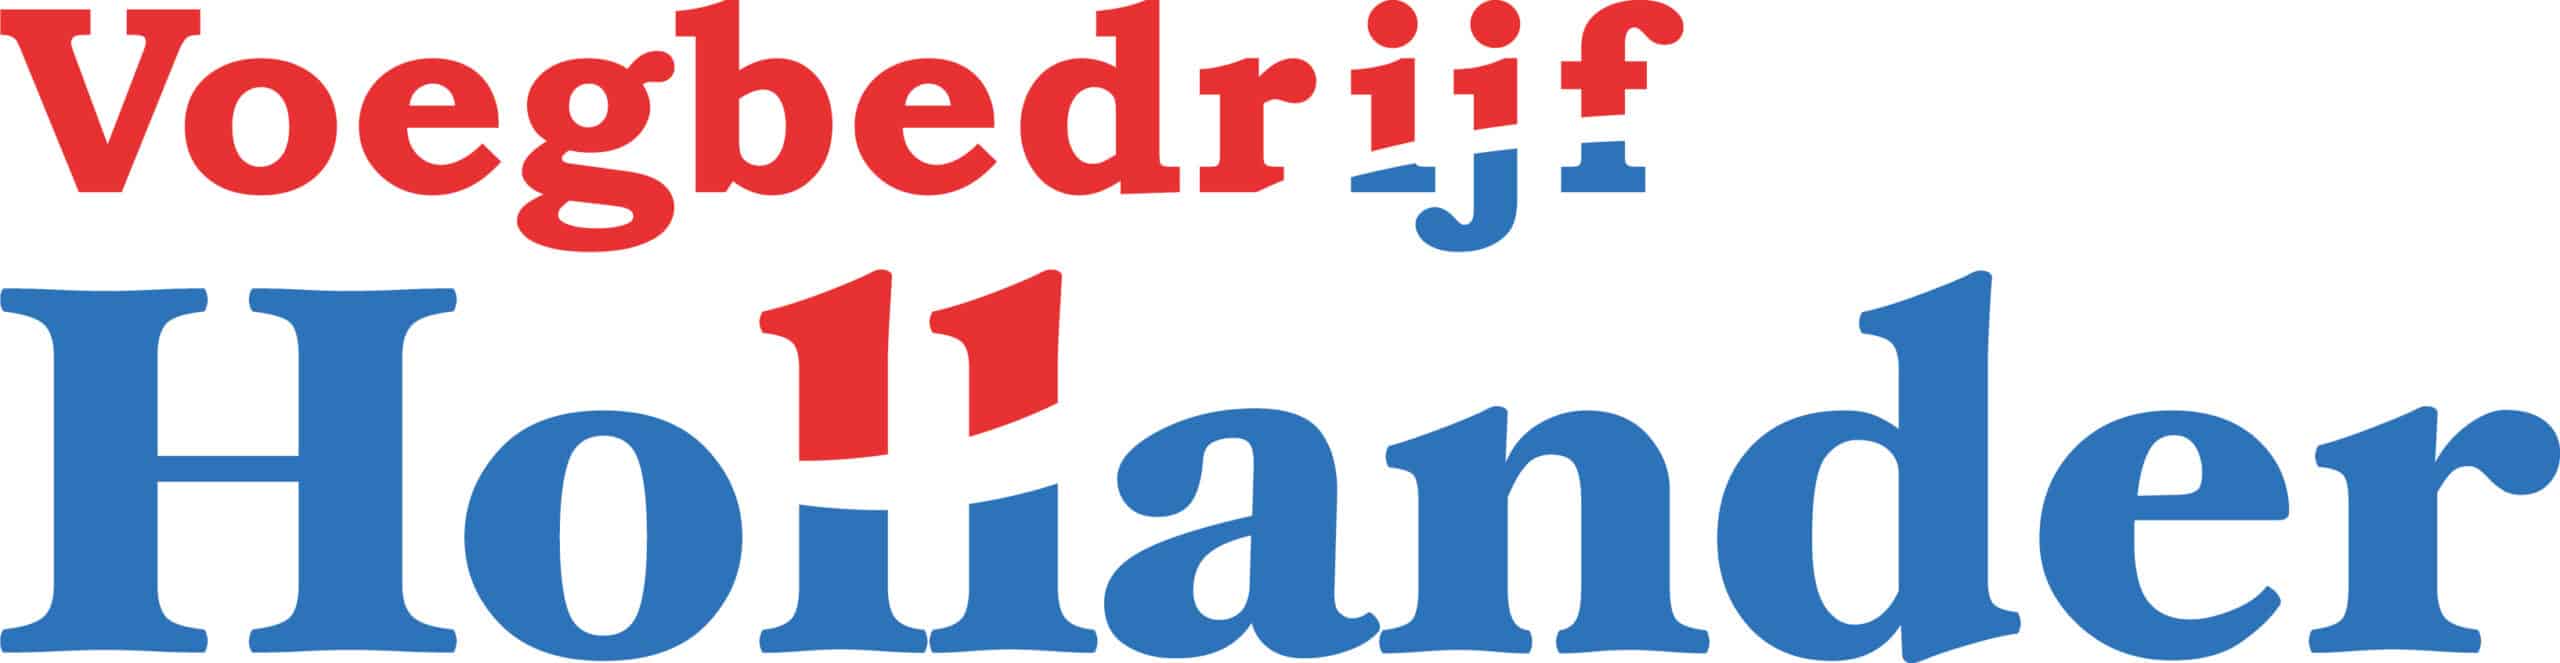 Logo_Voegbedrijf_Hollander_2018-scaled.jpg